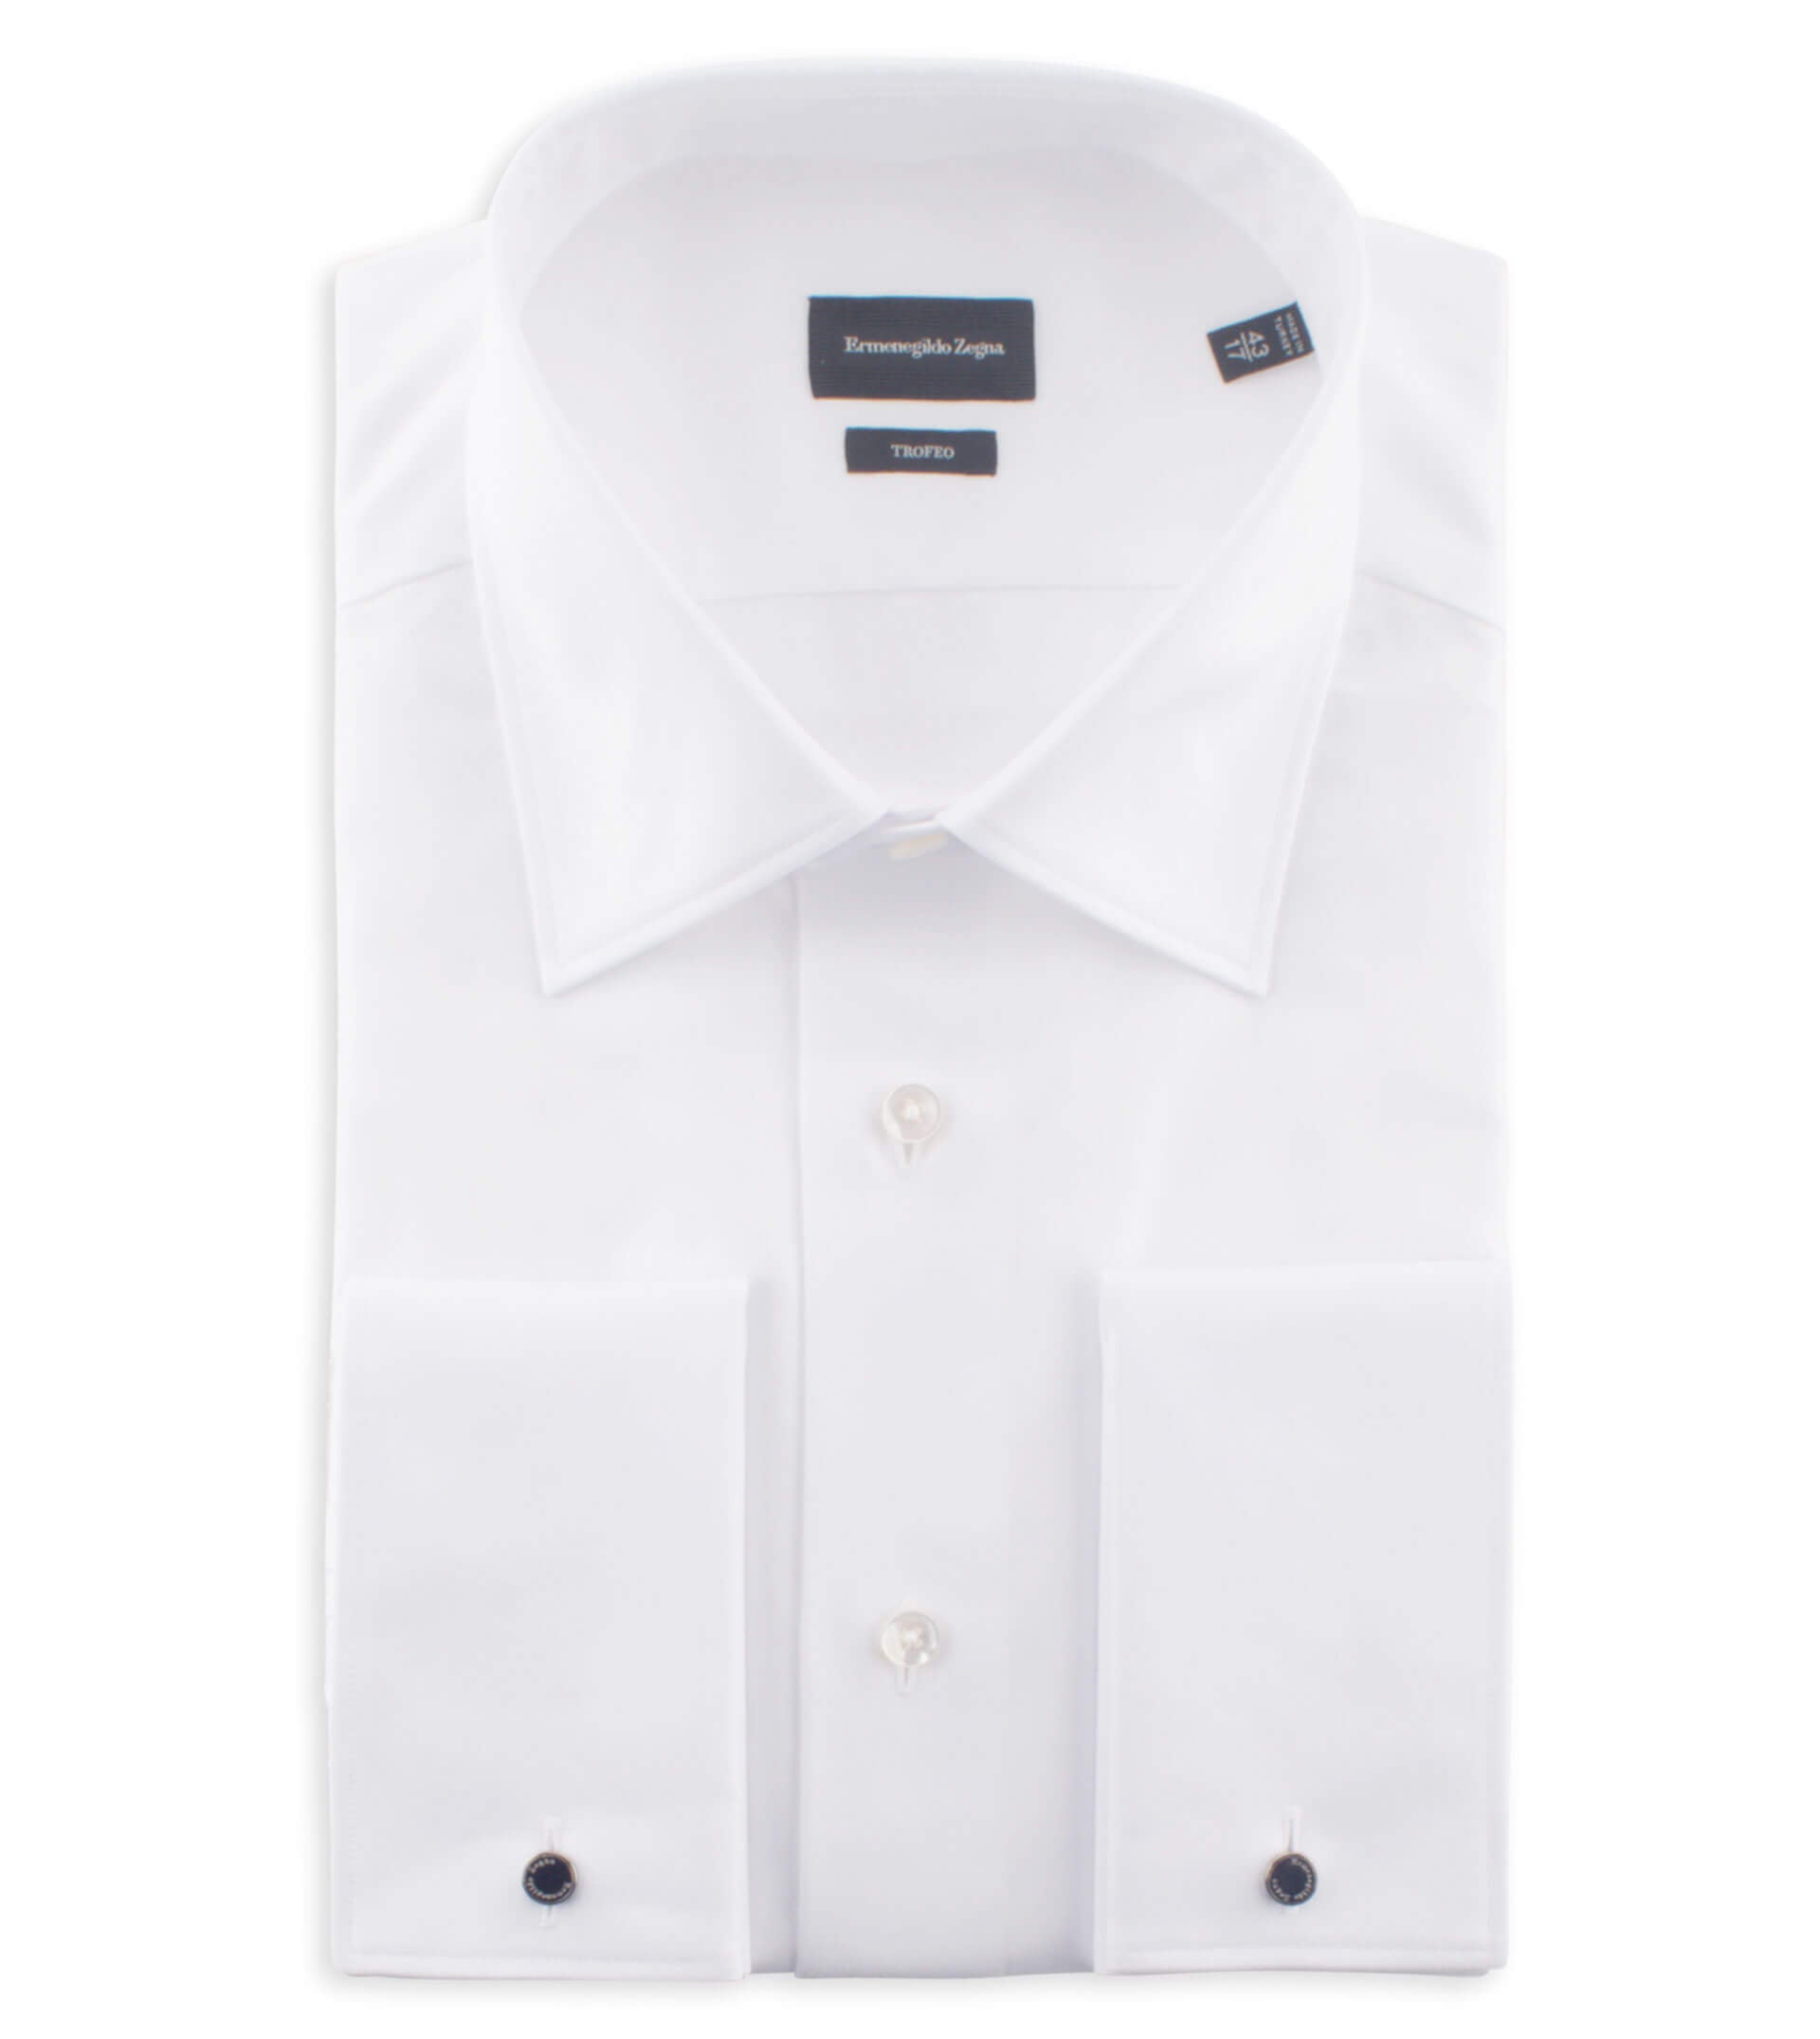 ZEGNA French Cuff White Twill Dress Shirt